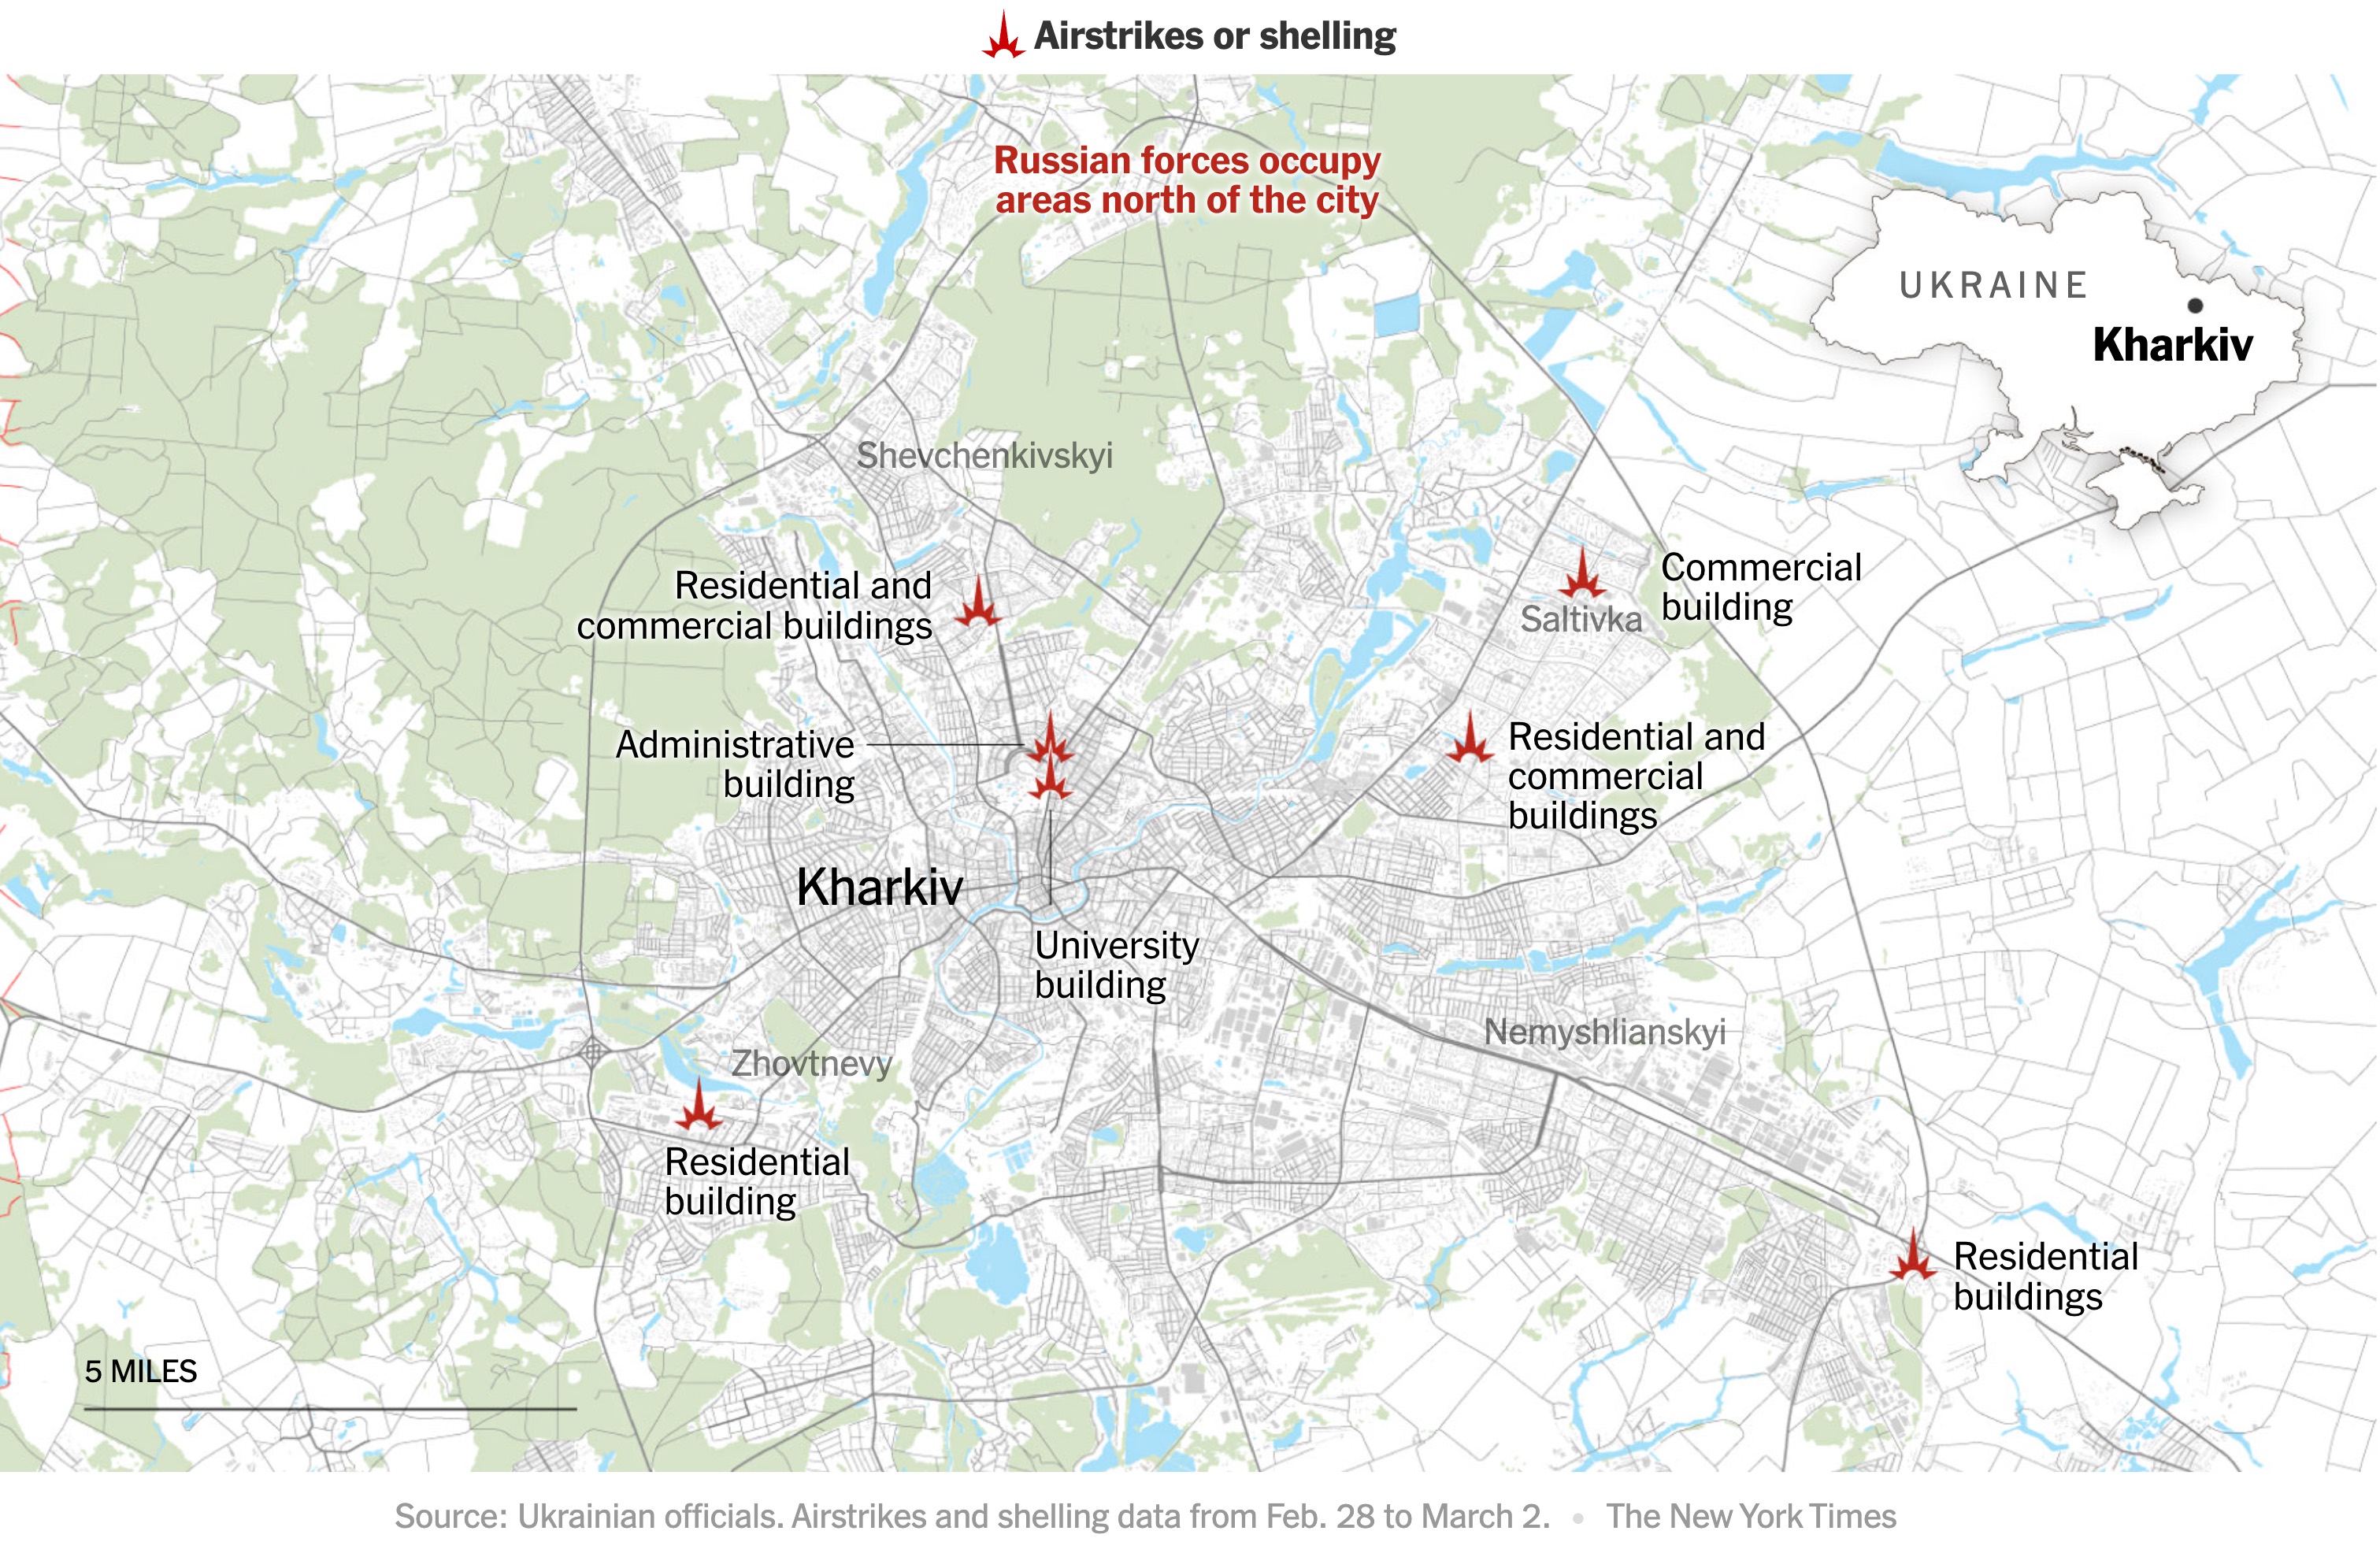 New York Times map of attacks on Kharkiv